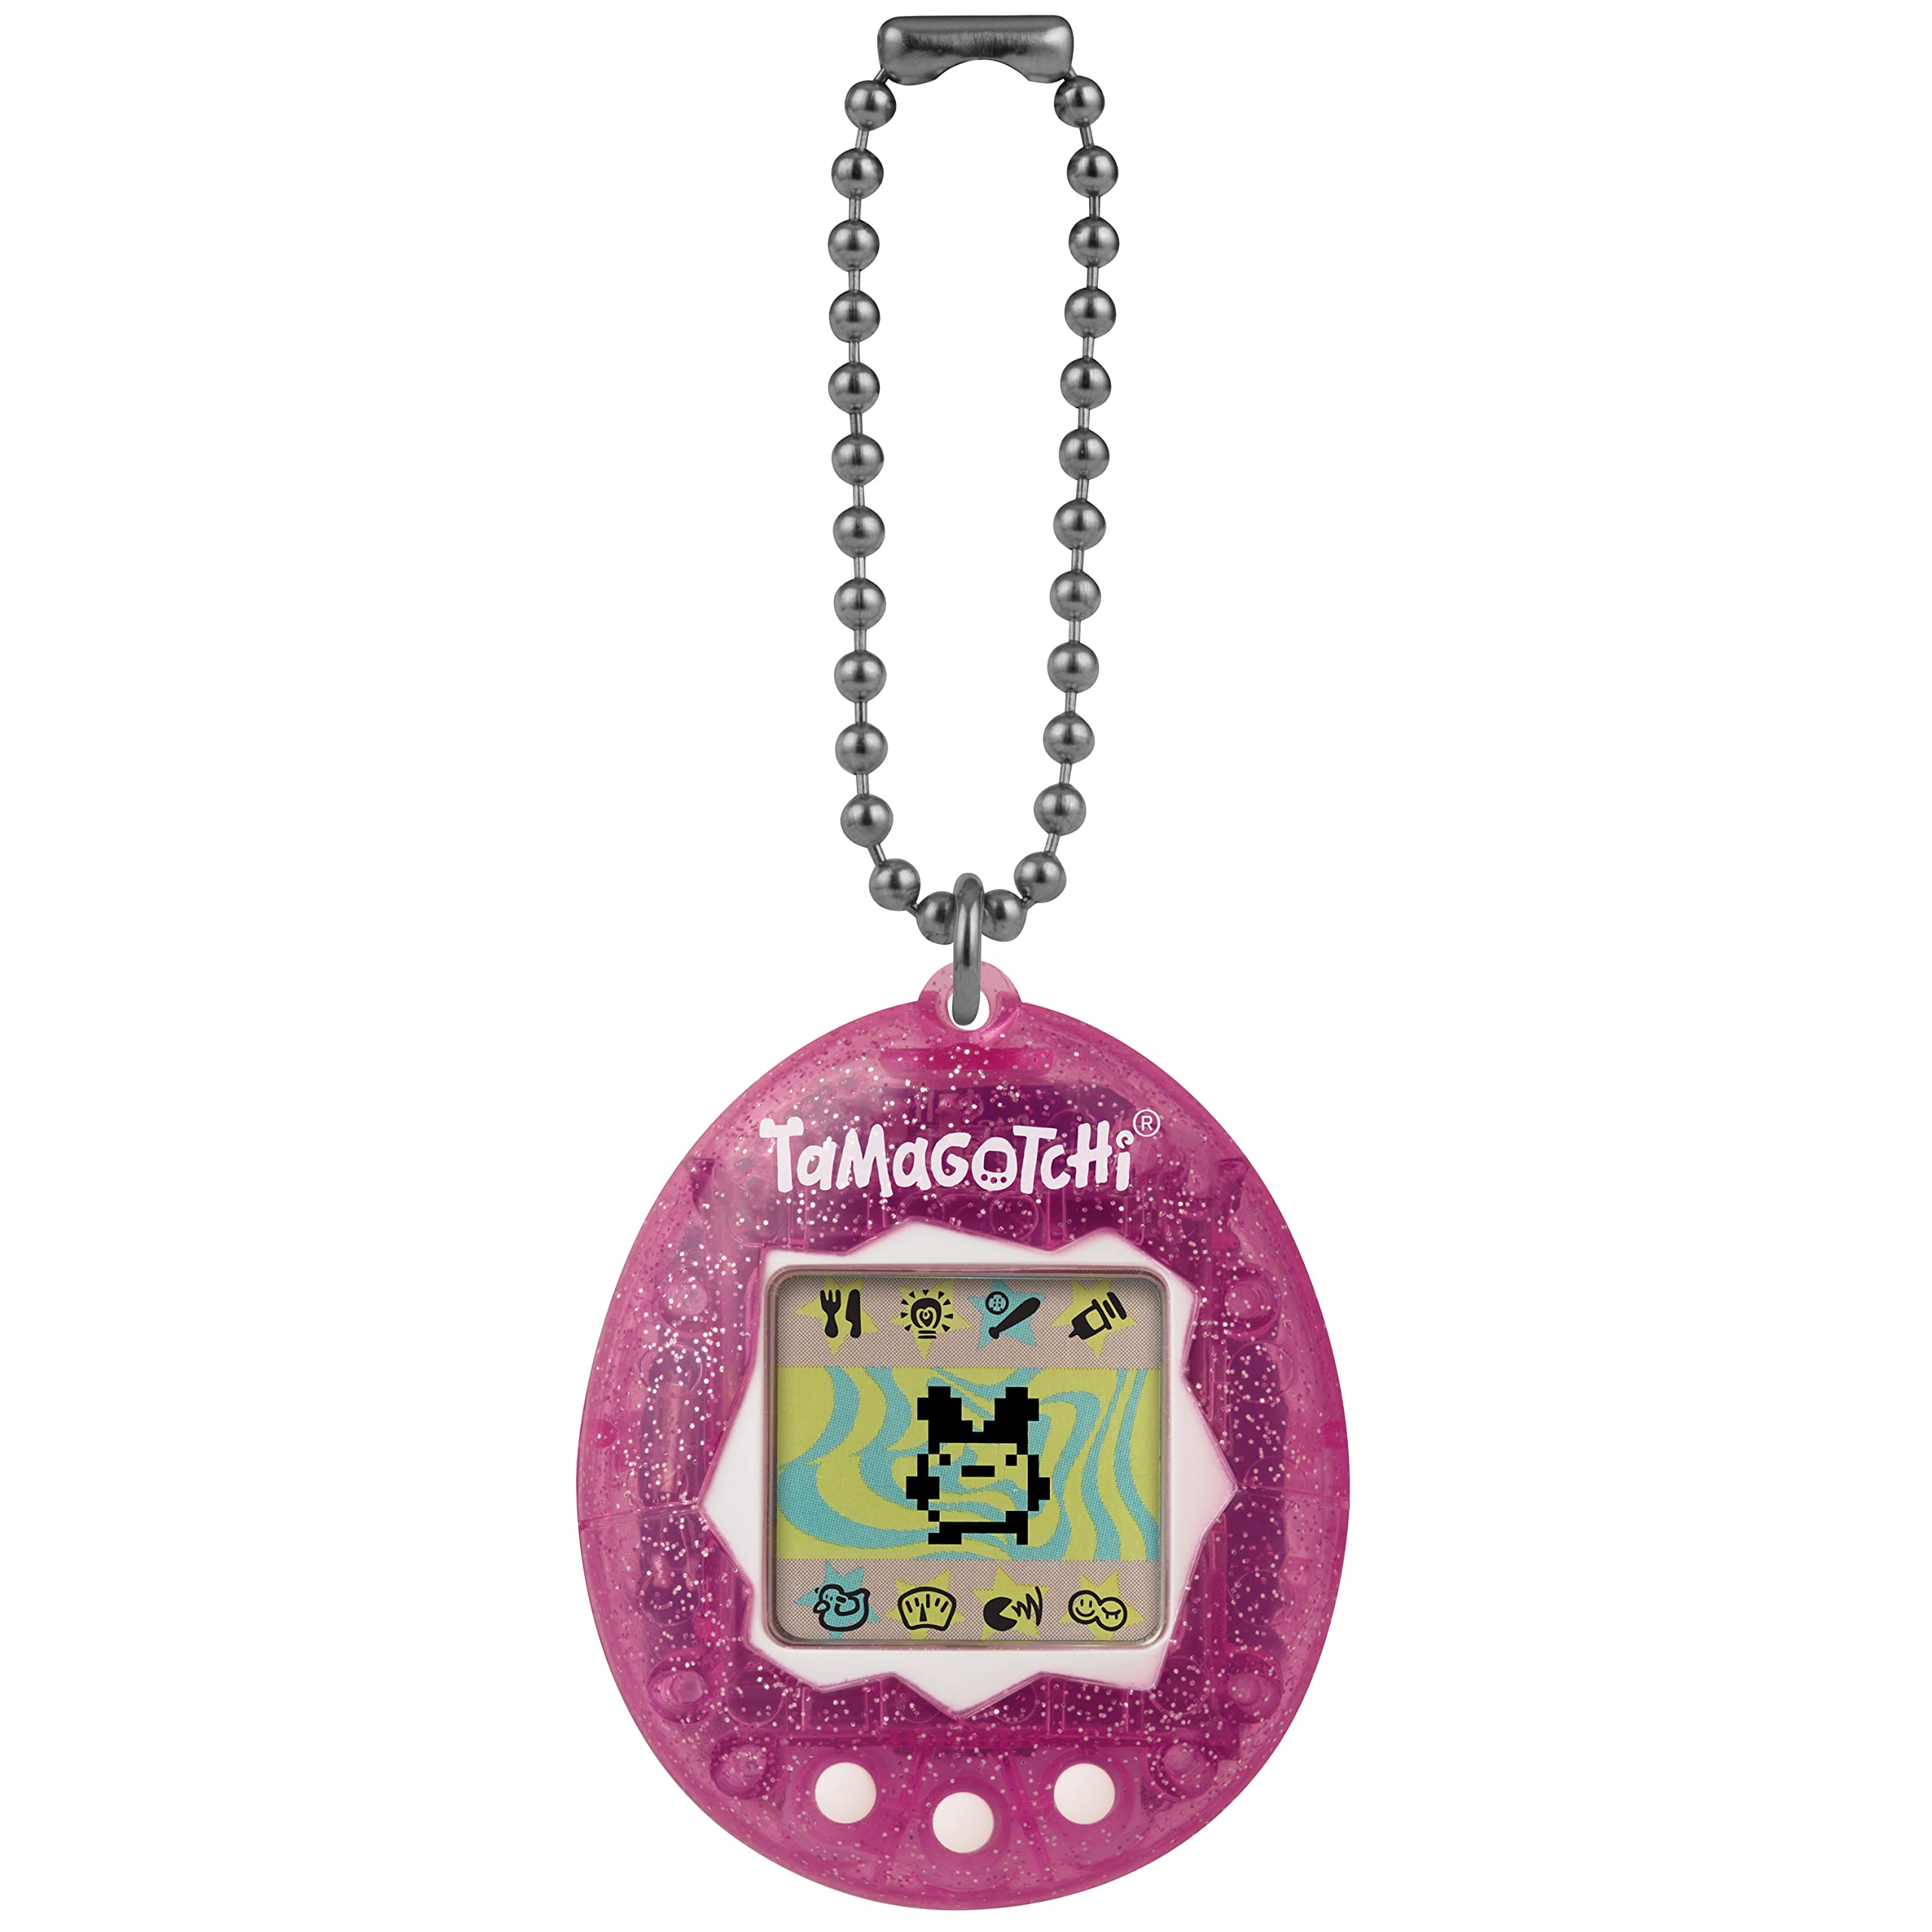 Tamagotchi Original (たまごっちオリジナル) 電子ゲーム - ピンクグリッター (新ロゴ) 2